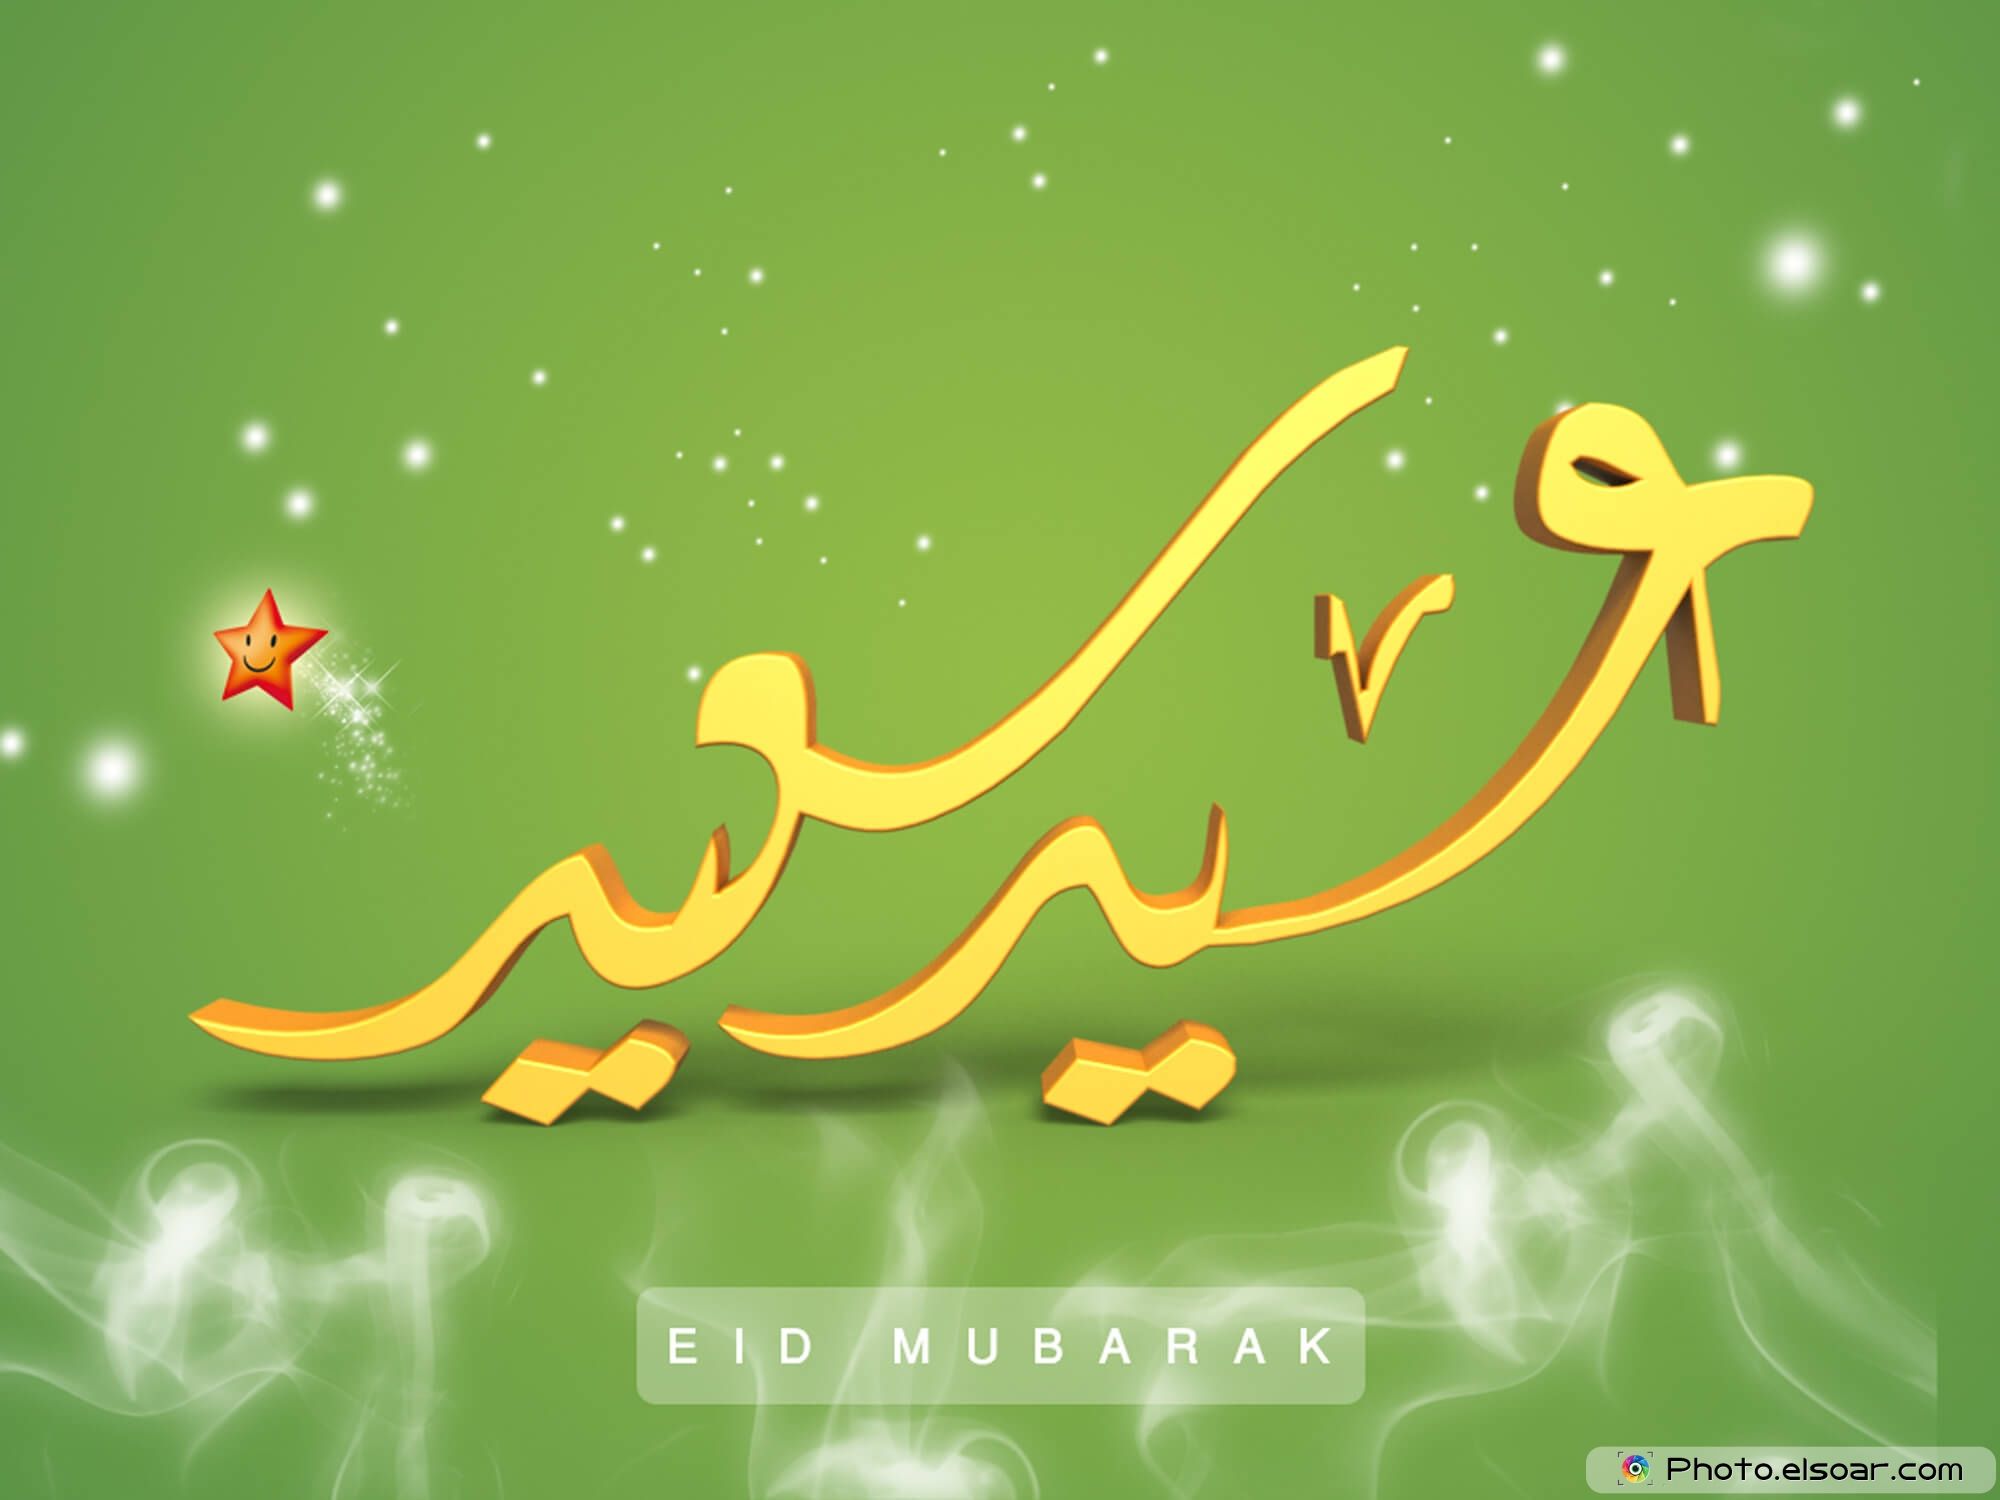 Eid Mubarak Image 2018 to all Islamic countries